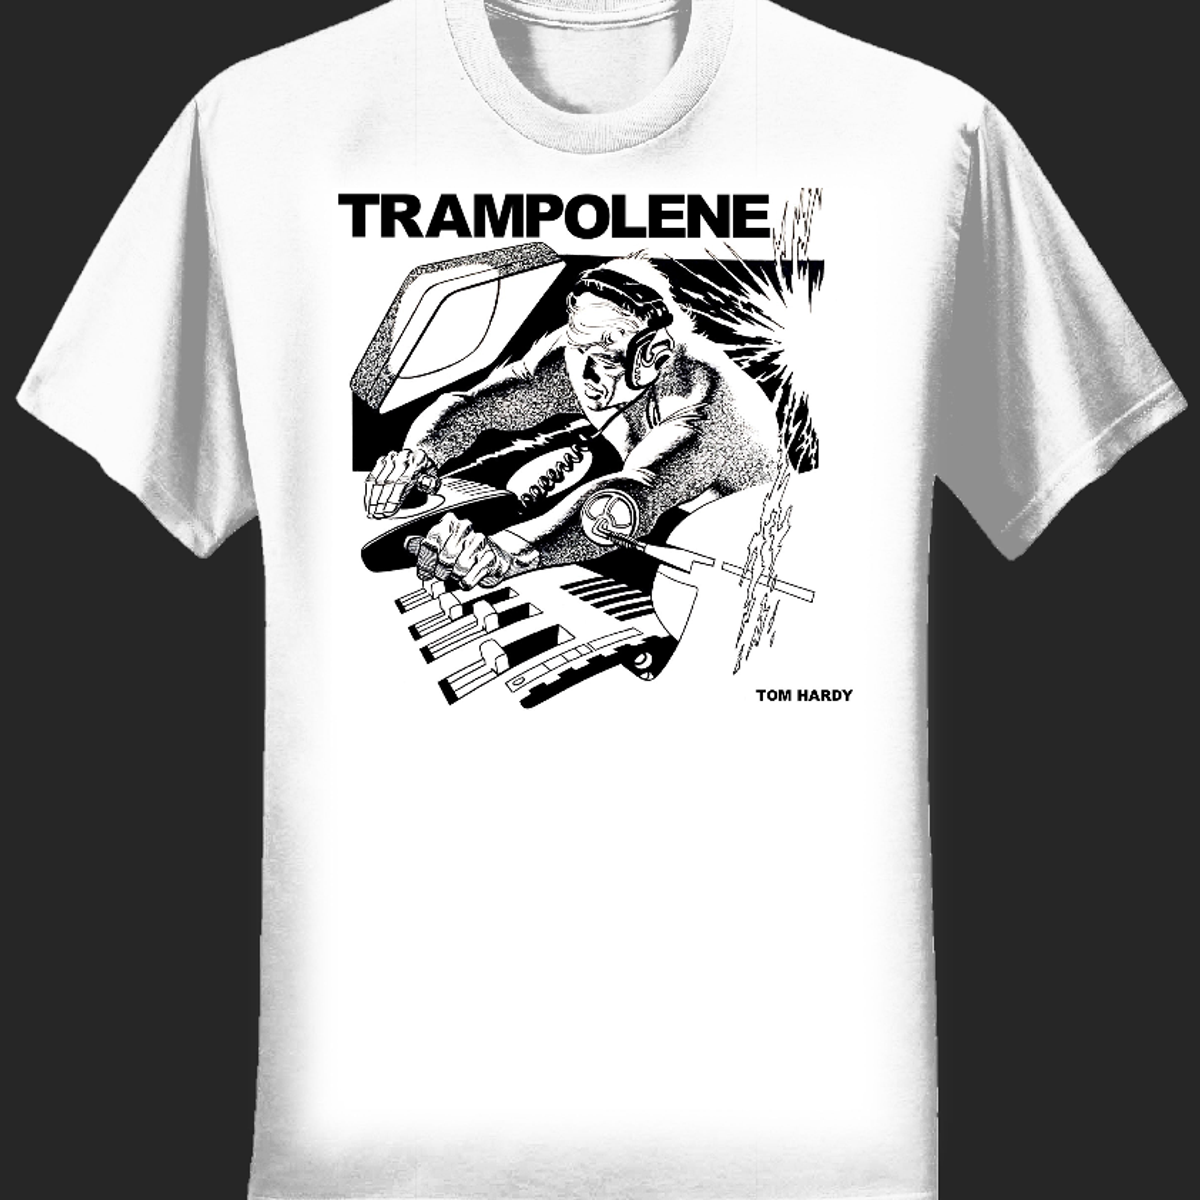 TRAMPOLENE - Tom Hardy T-shirt.